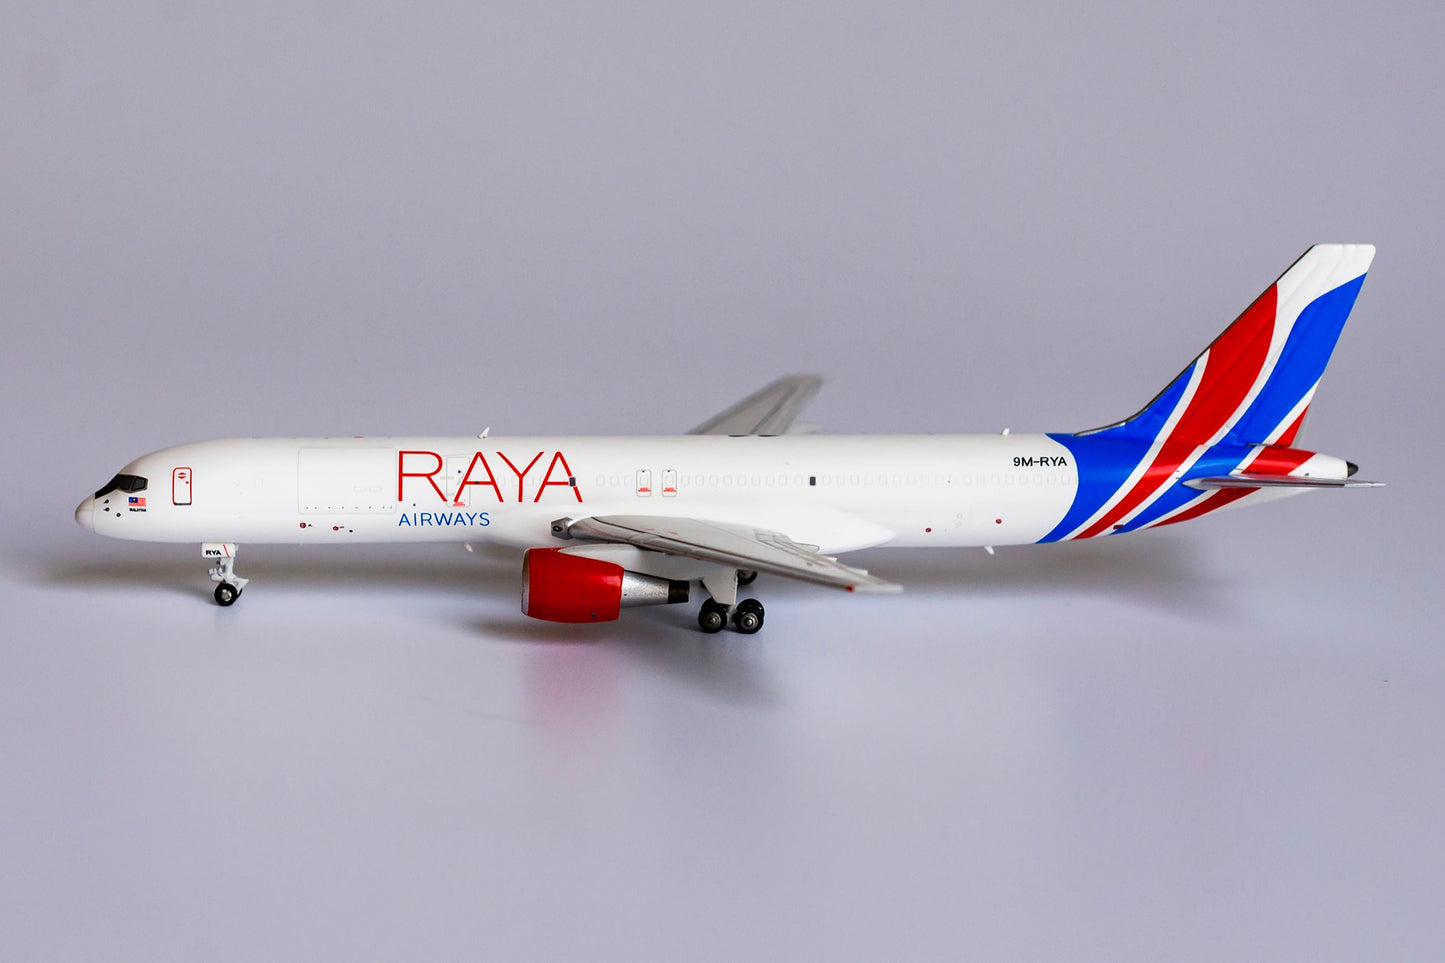 1:400 NG Models Raya Airways Boeing 757-200PCF "Old Colors" 9M-RYA 53165